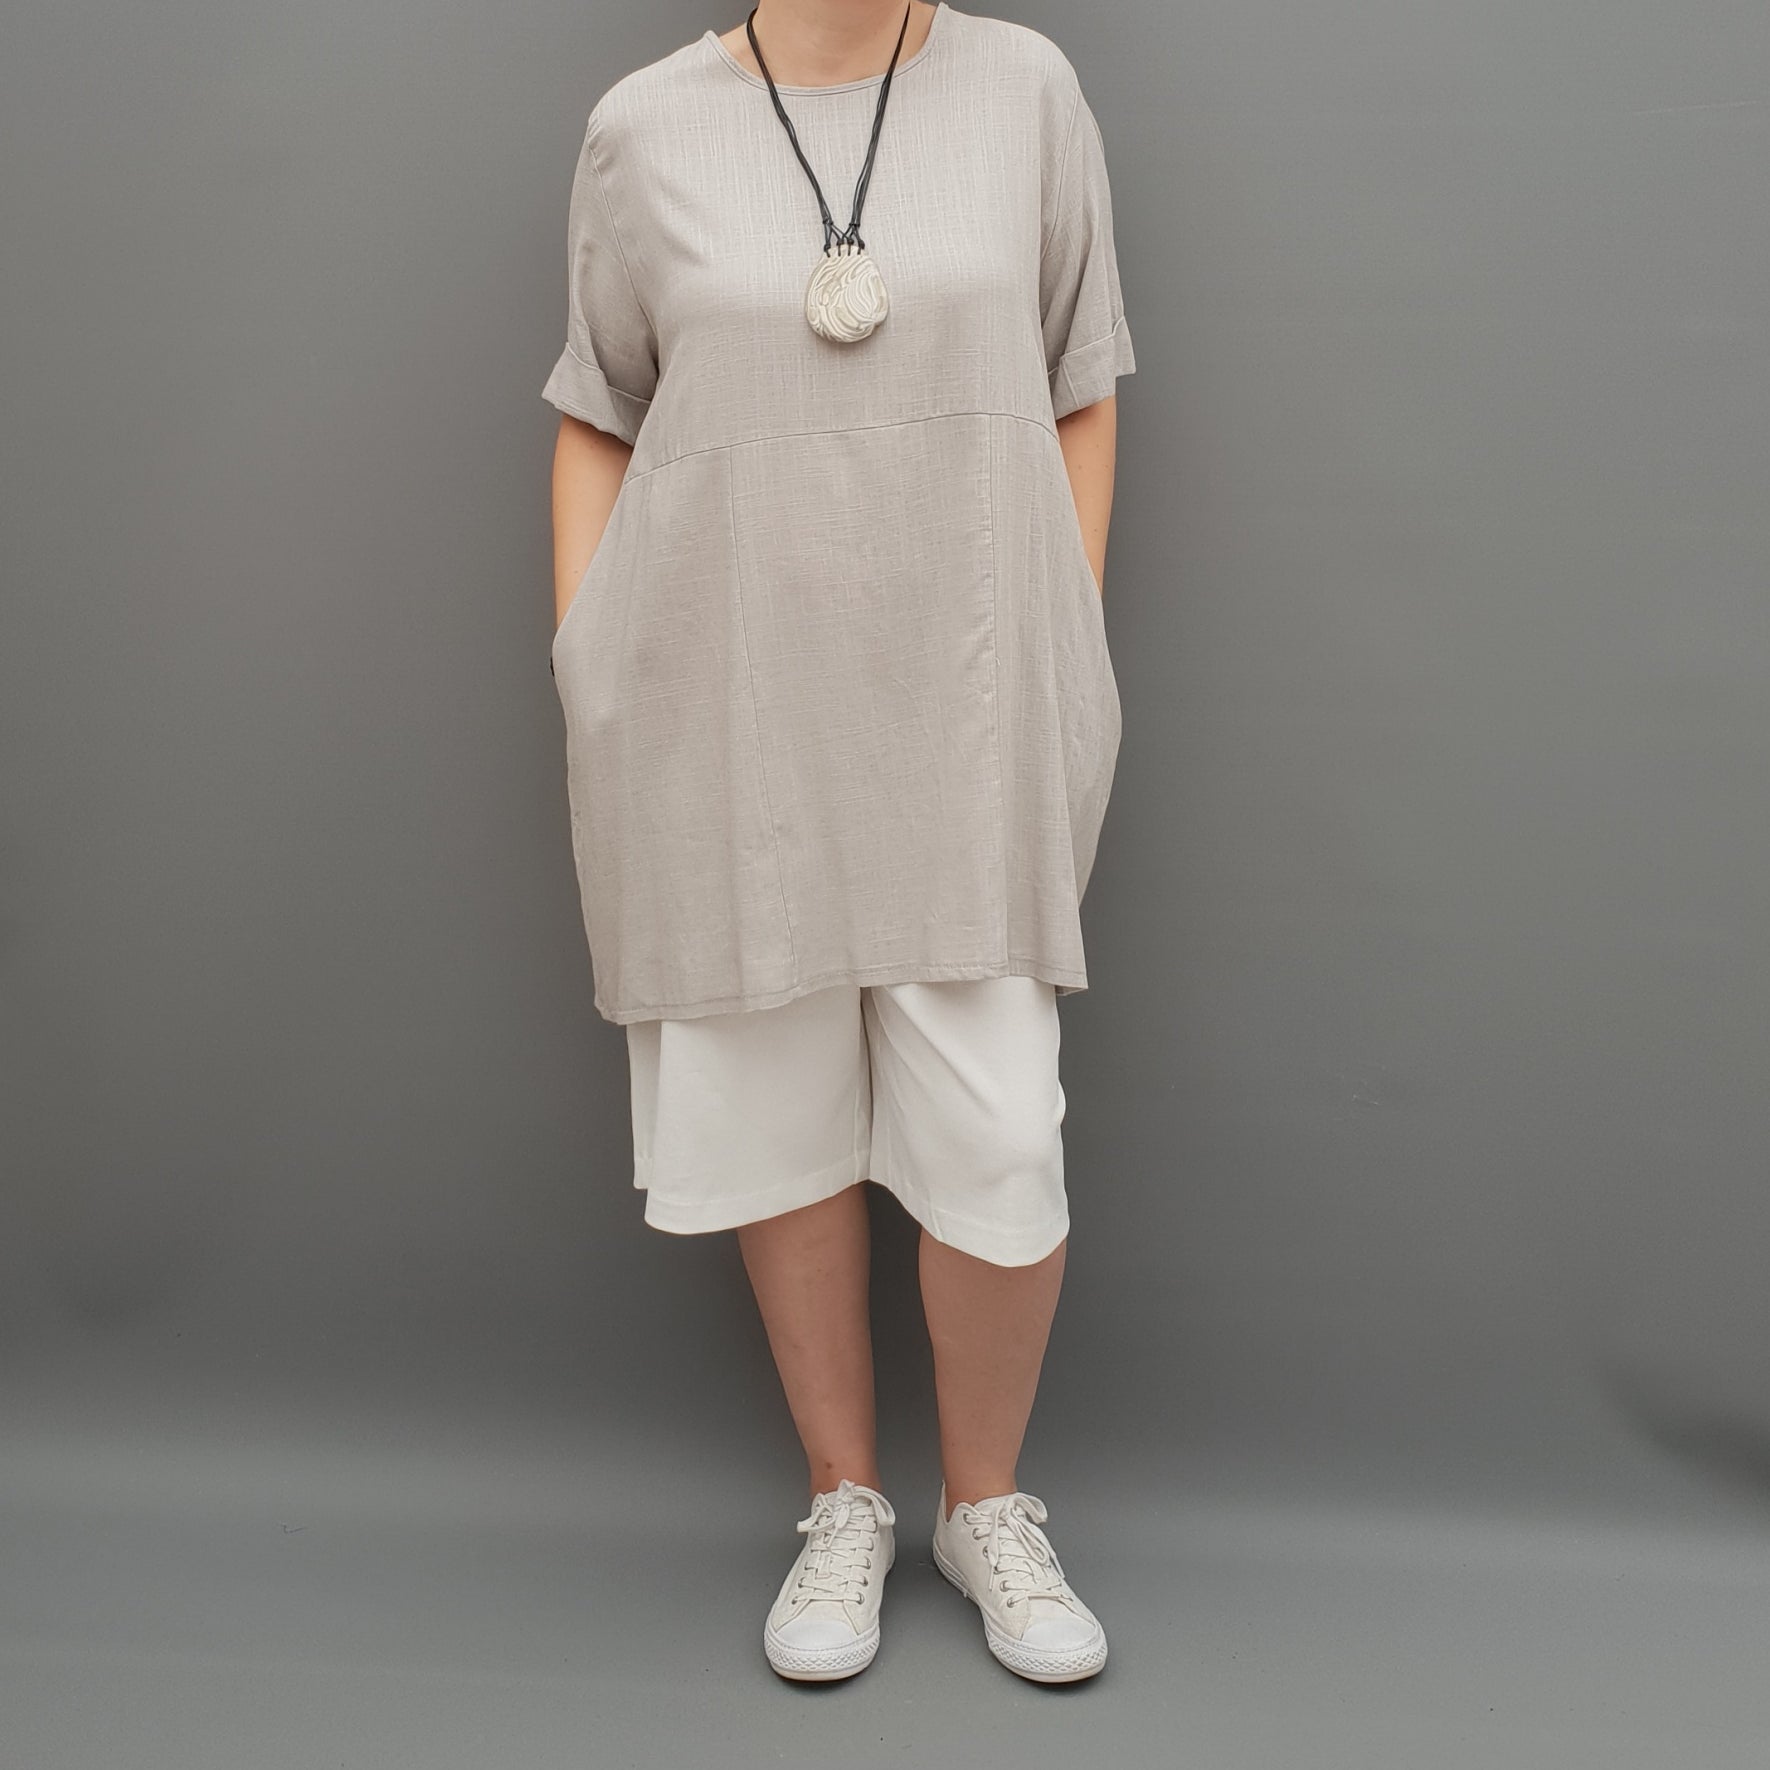 Linen Tunic Summer Top Loose Lagenlook Blouse Short Sleeve Plus